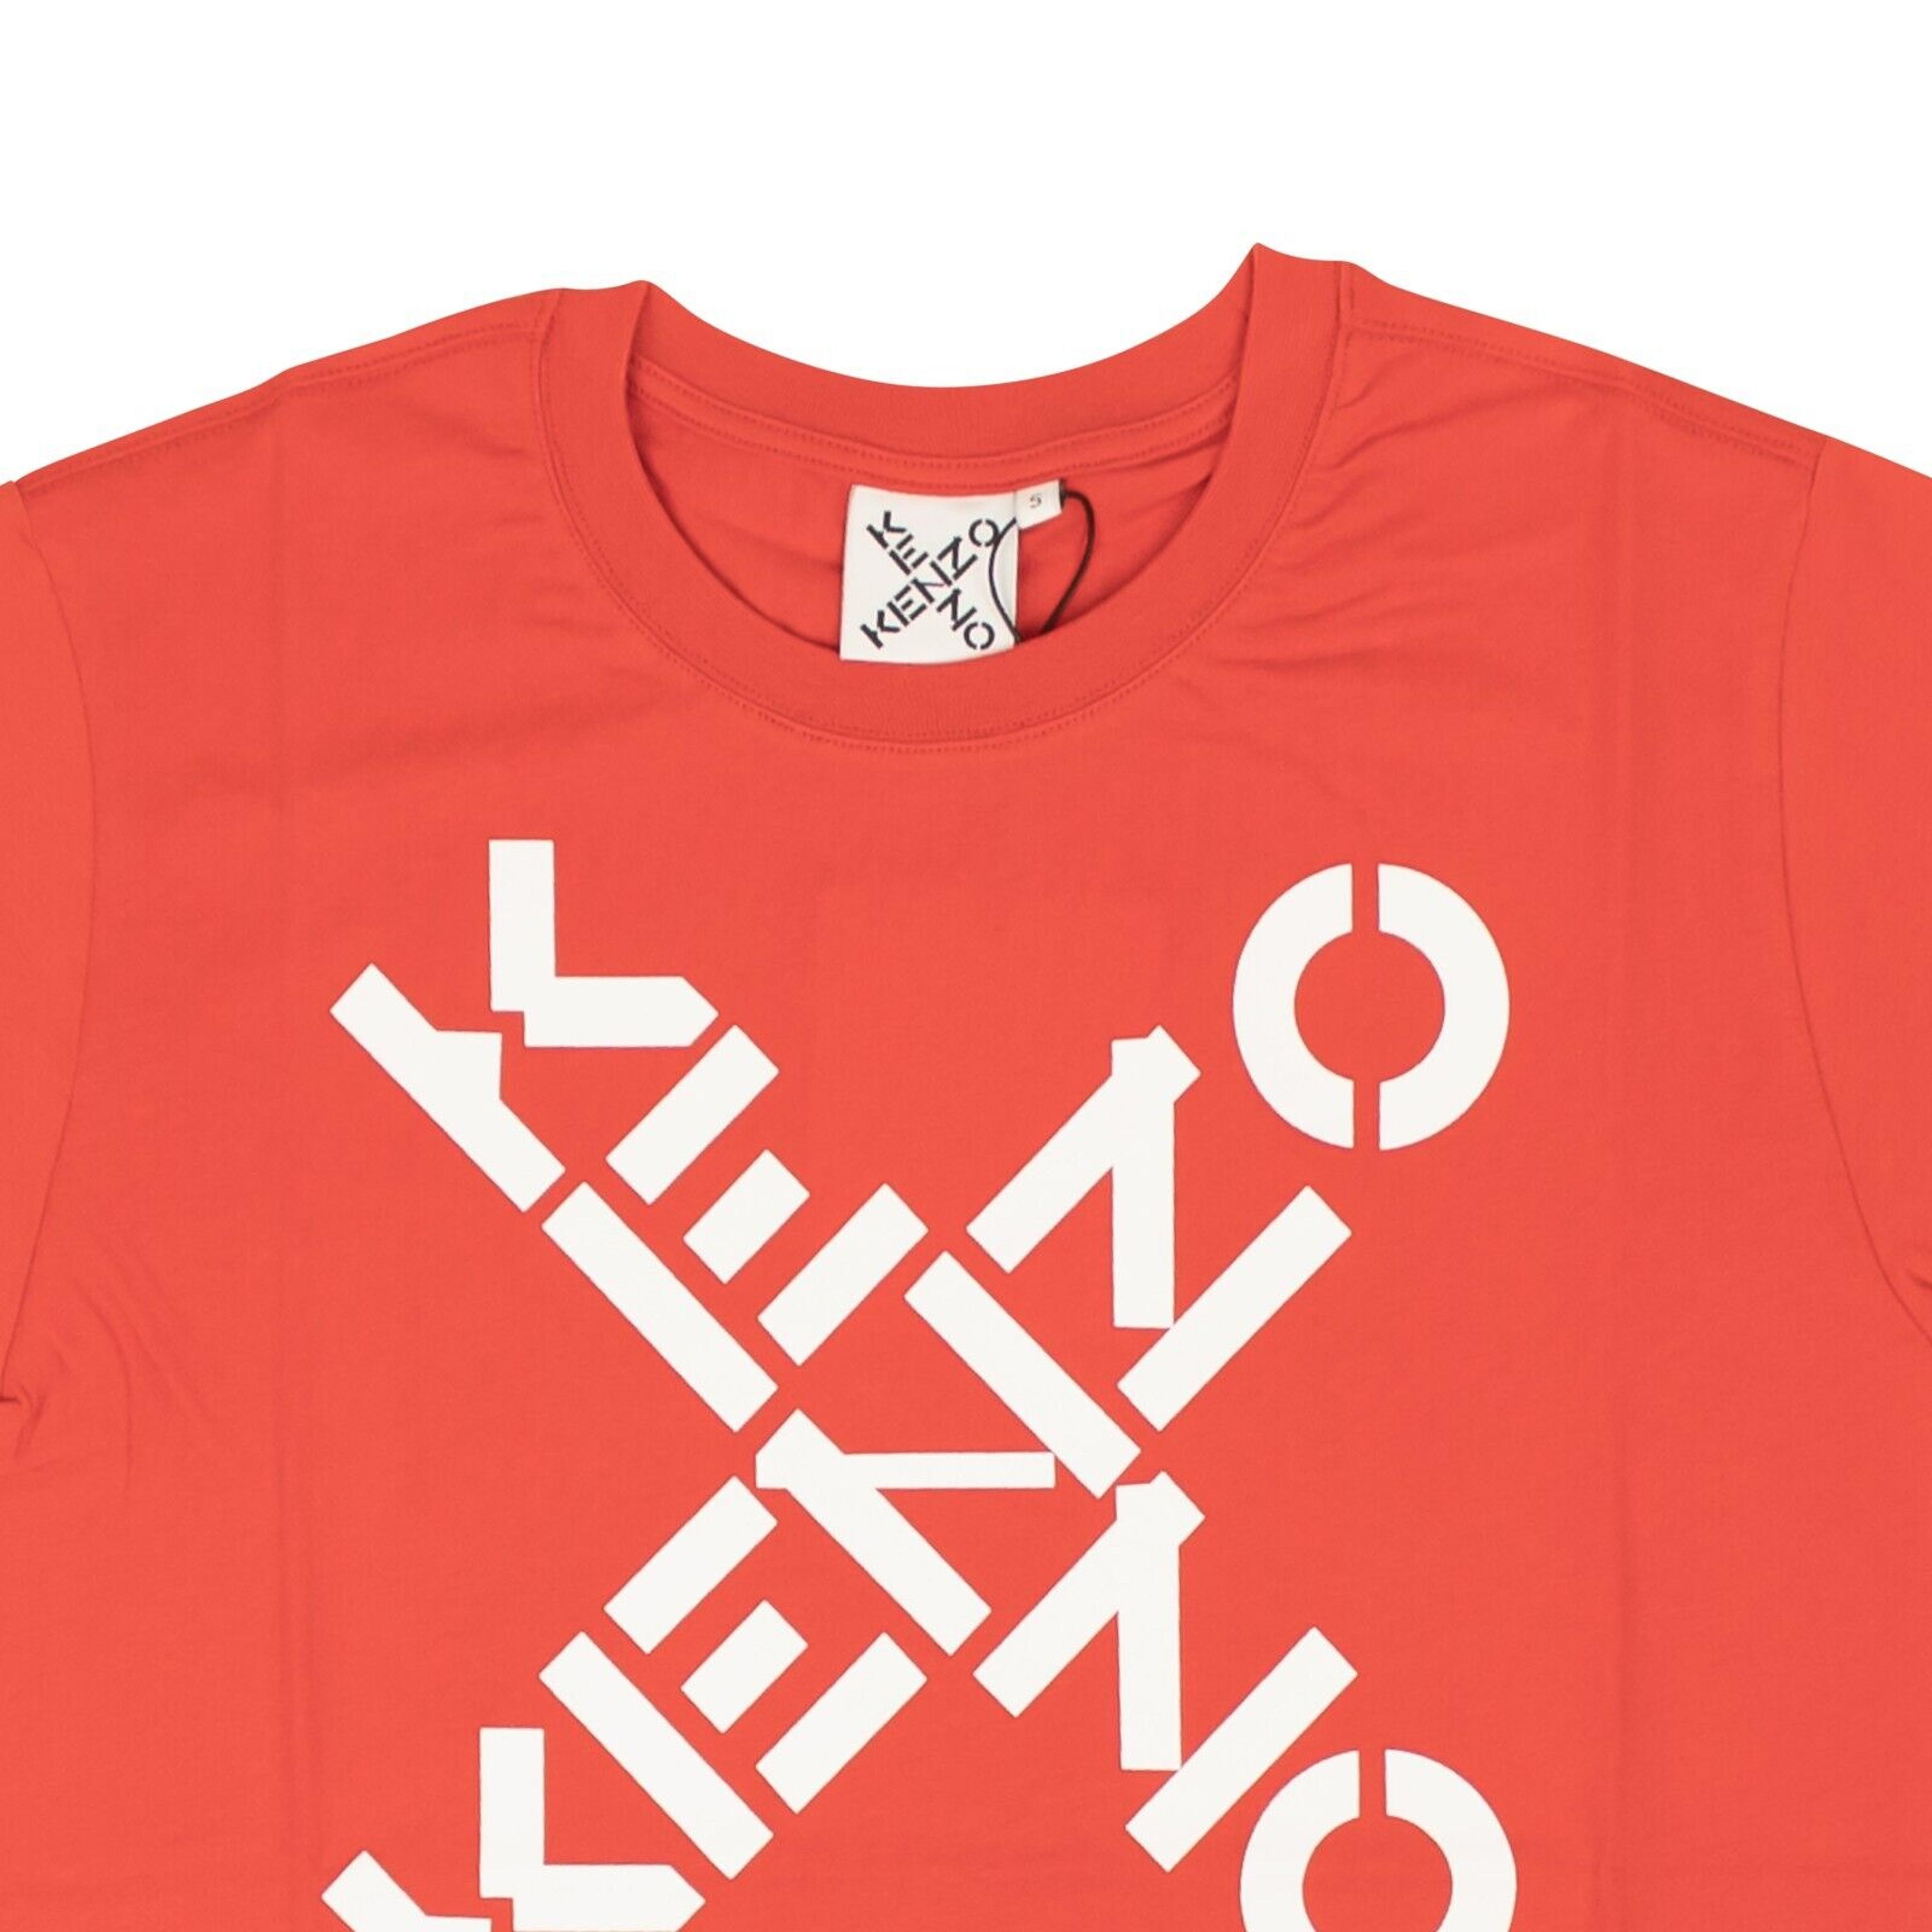 Alternate View 1 of Kenzo Big X T-Shirt - Red